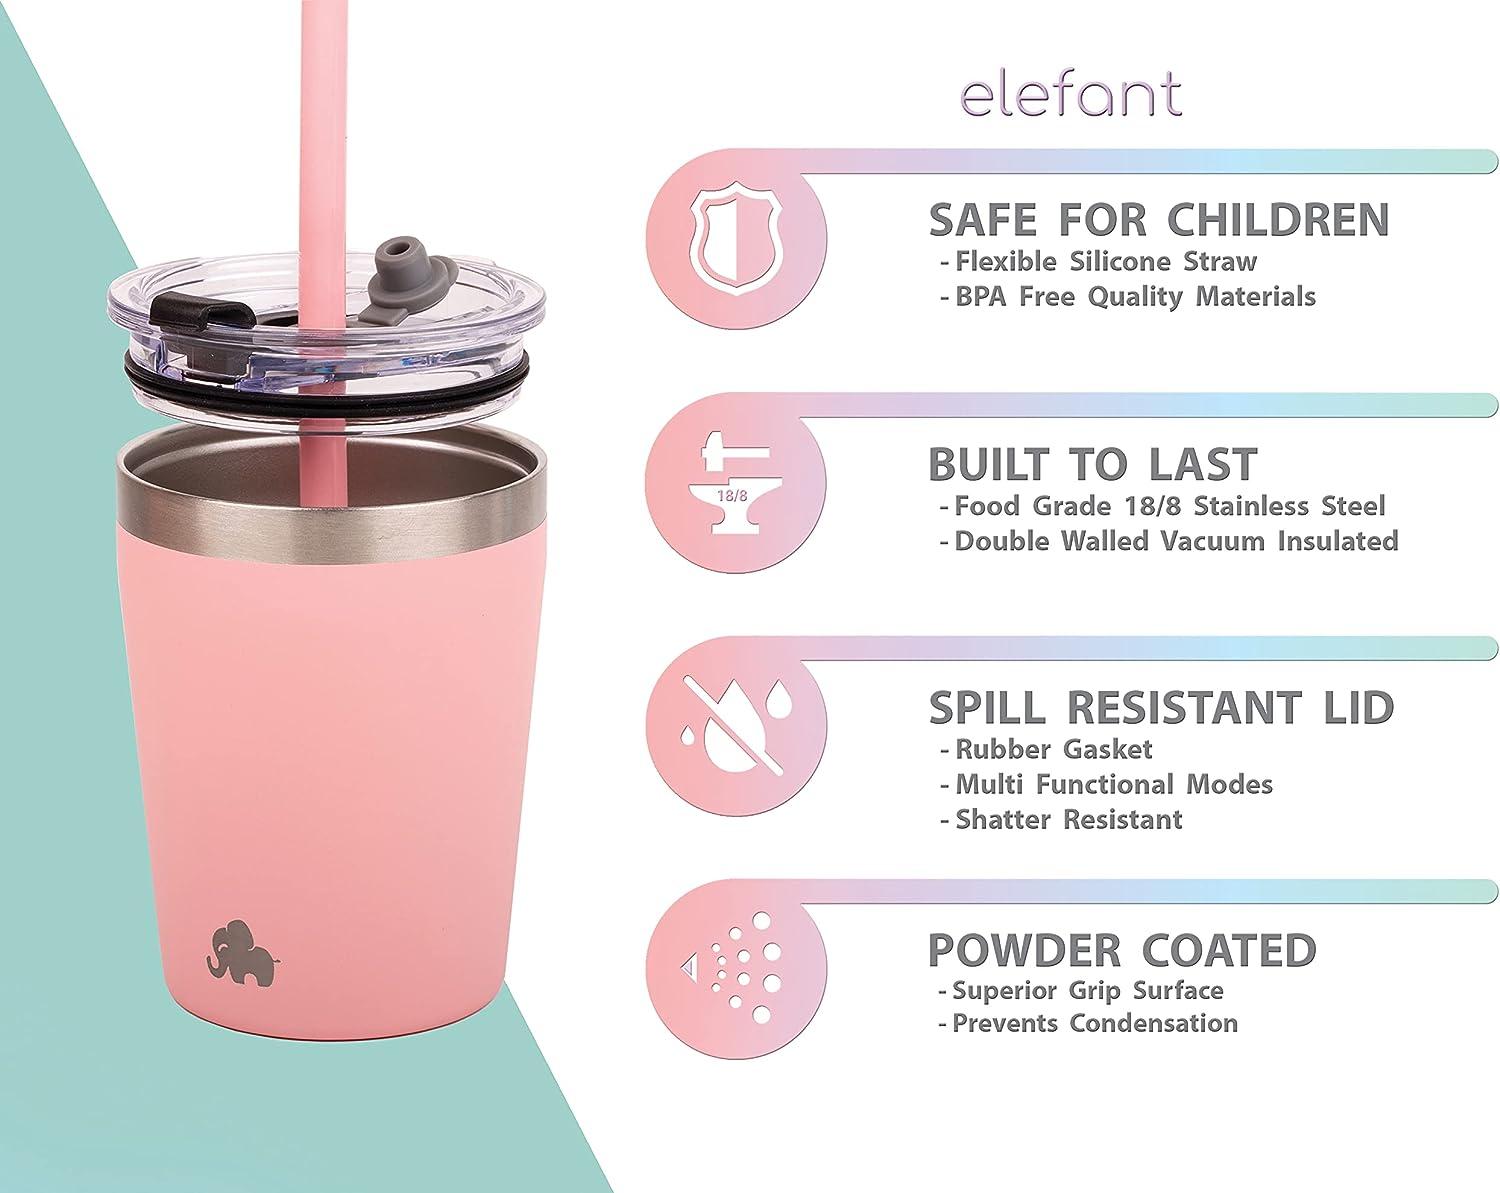 Multi Function Elephant Thermos Bottle Vacuum Cup Flasks Mug Kids